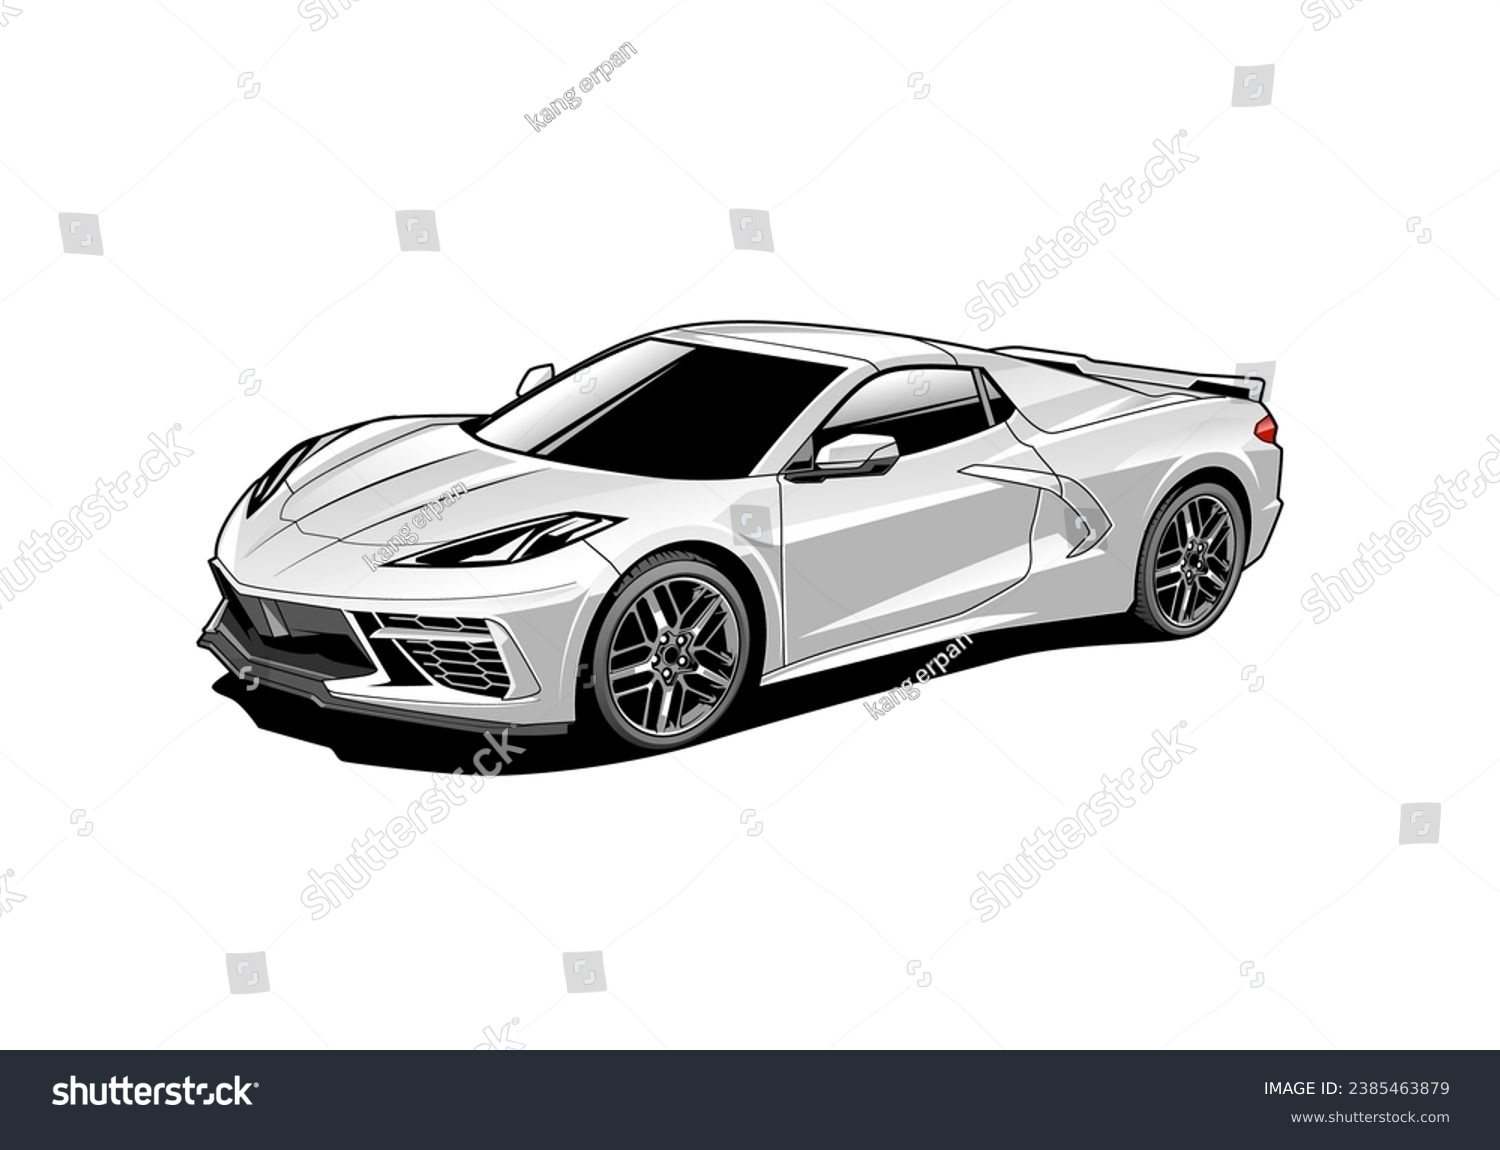 SVG of hand drawn car illustration vector svg